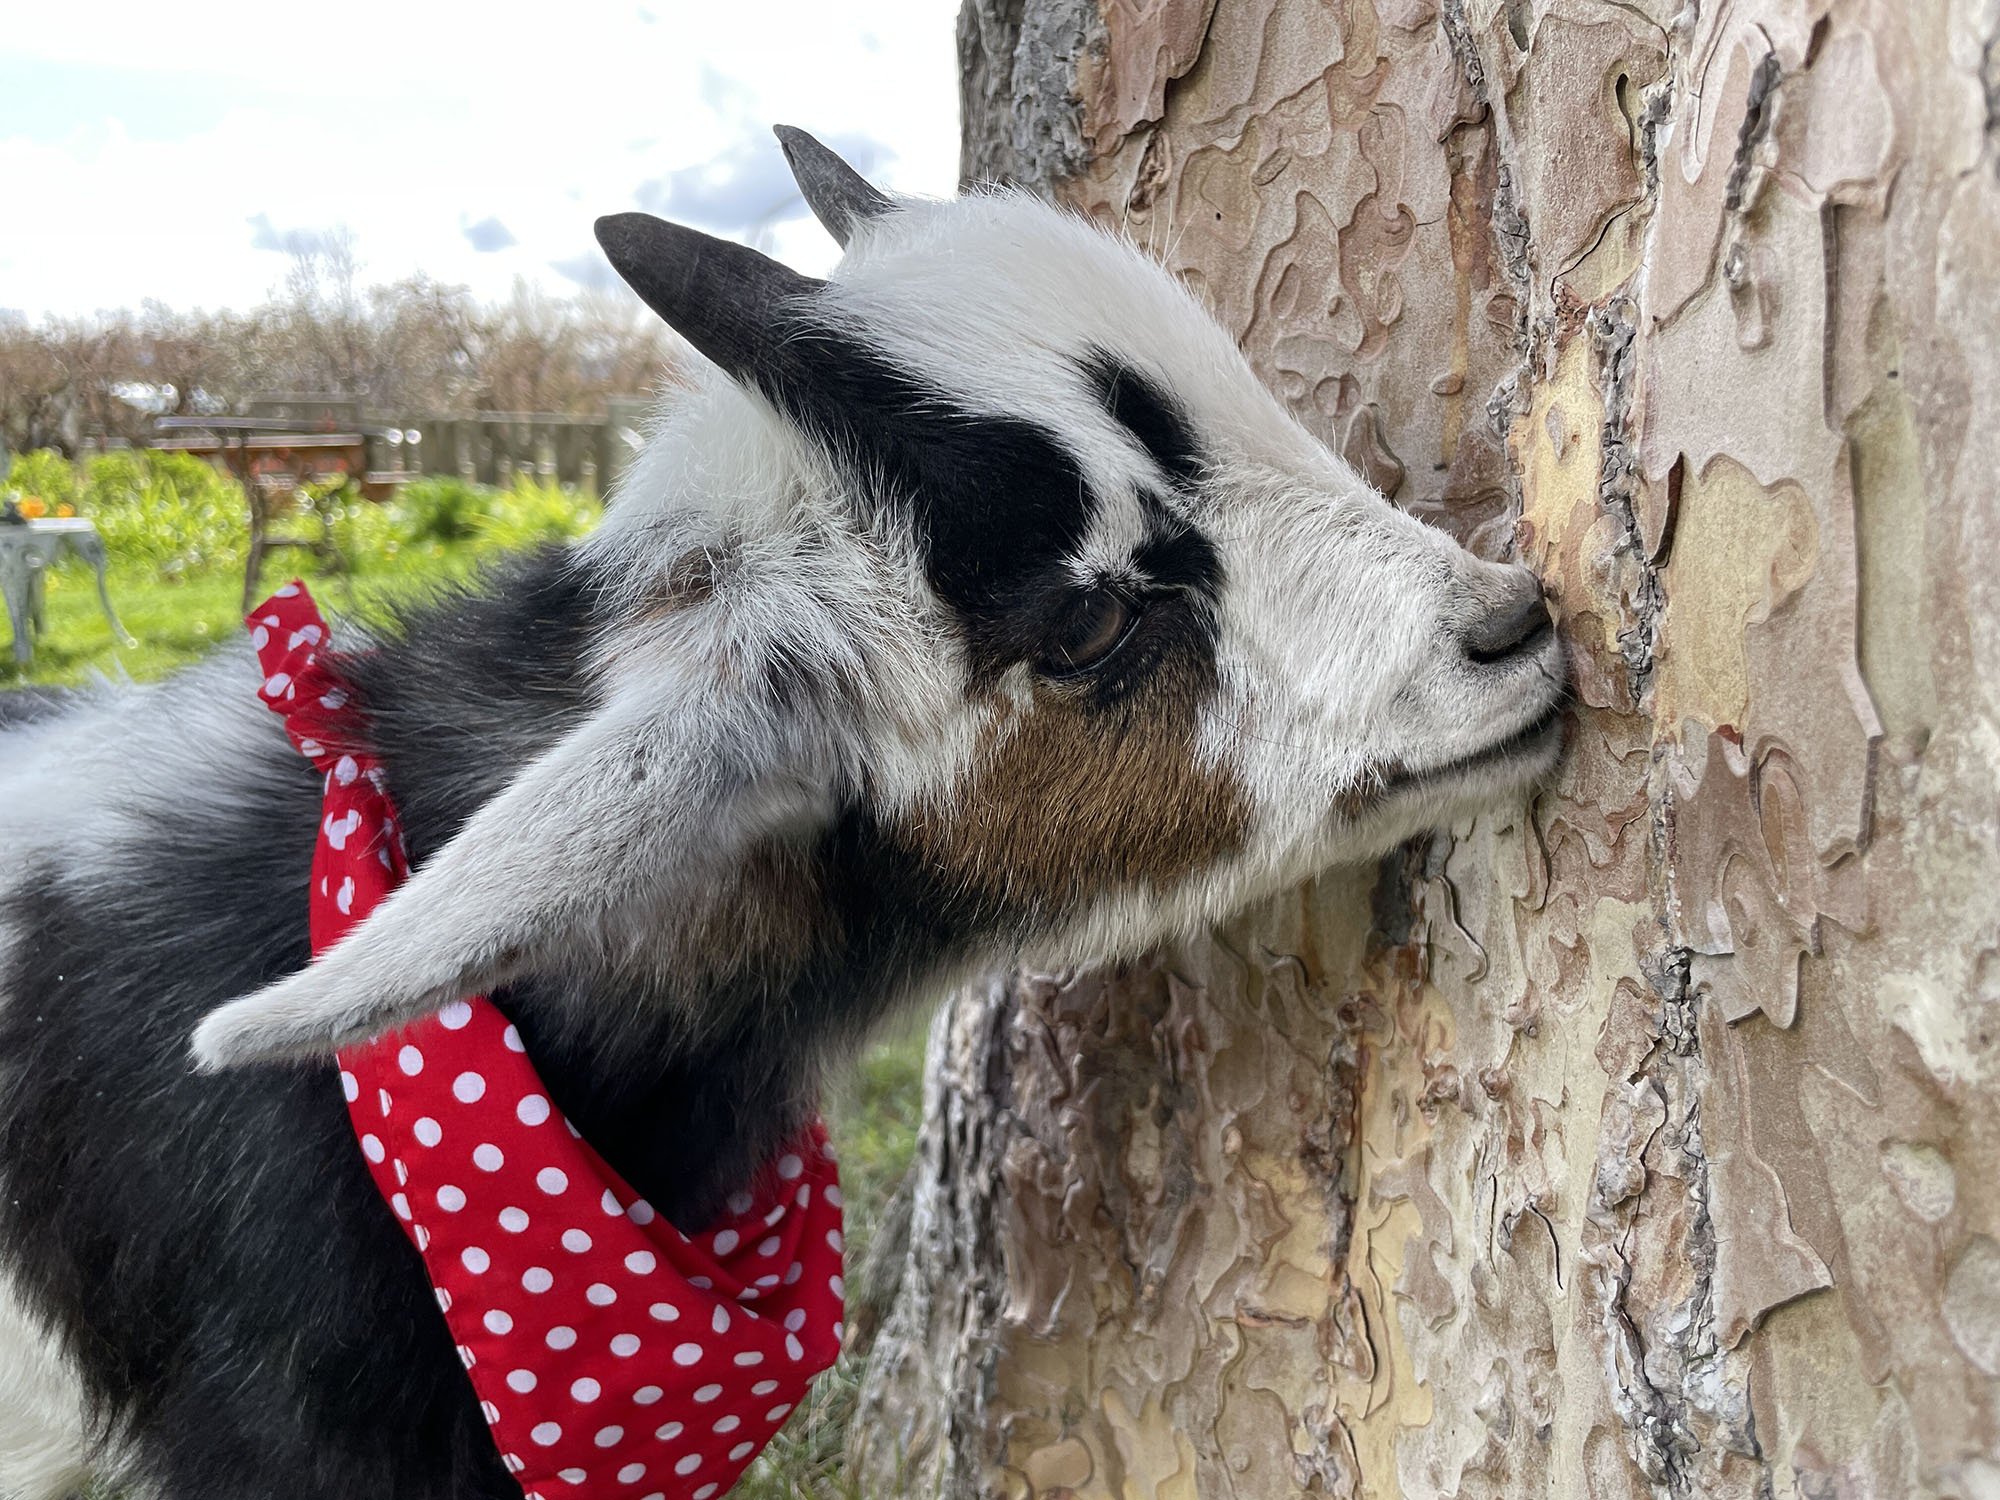 goat in a red bandana eating tree bark